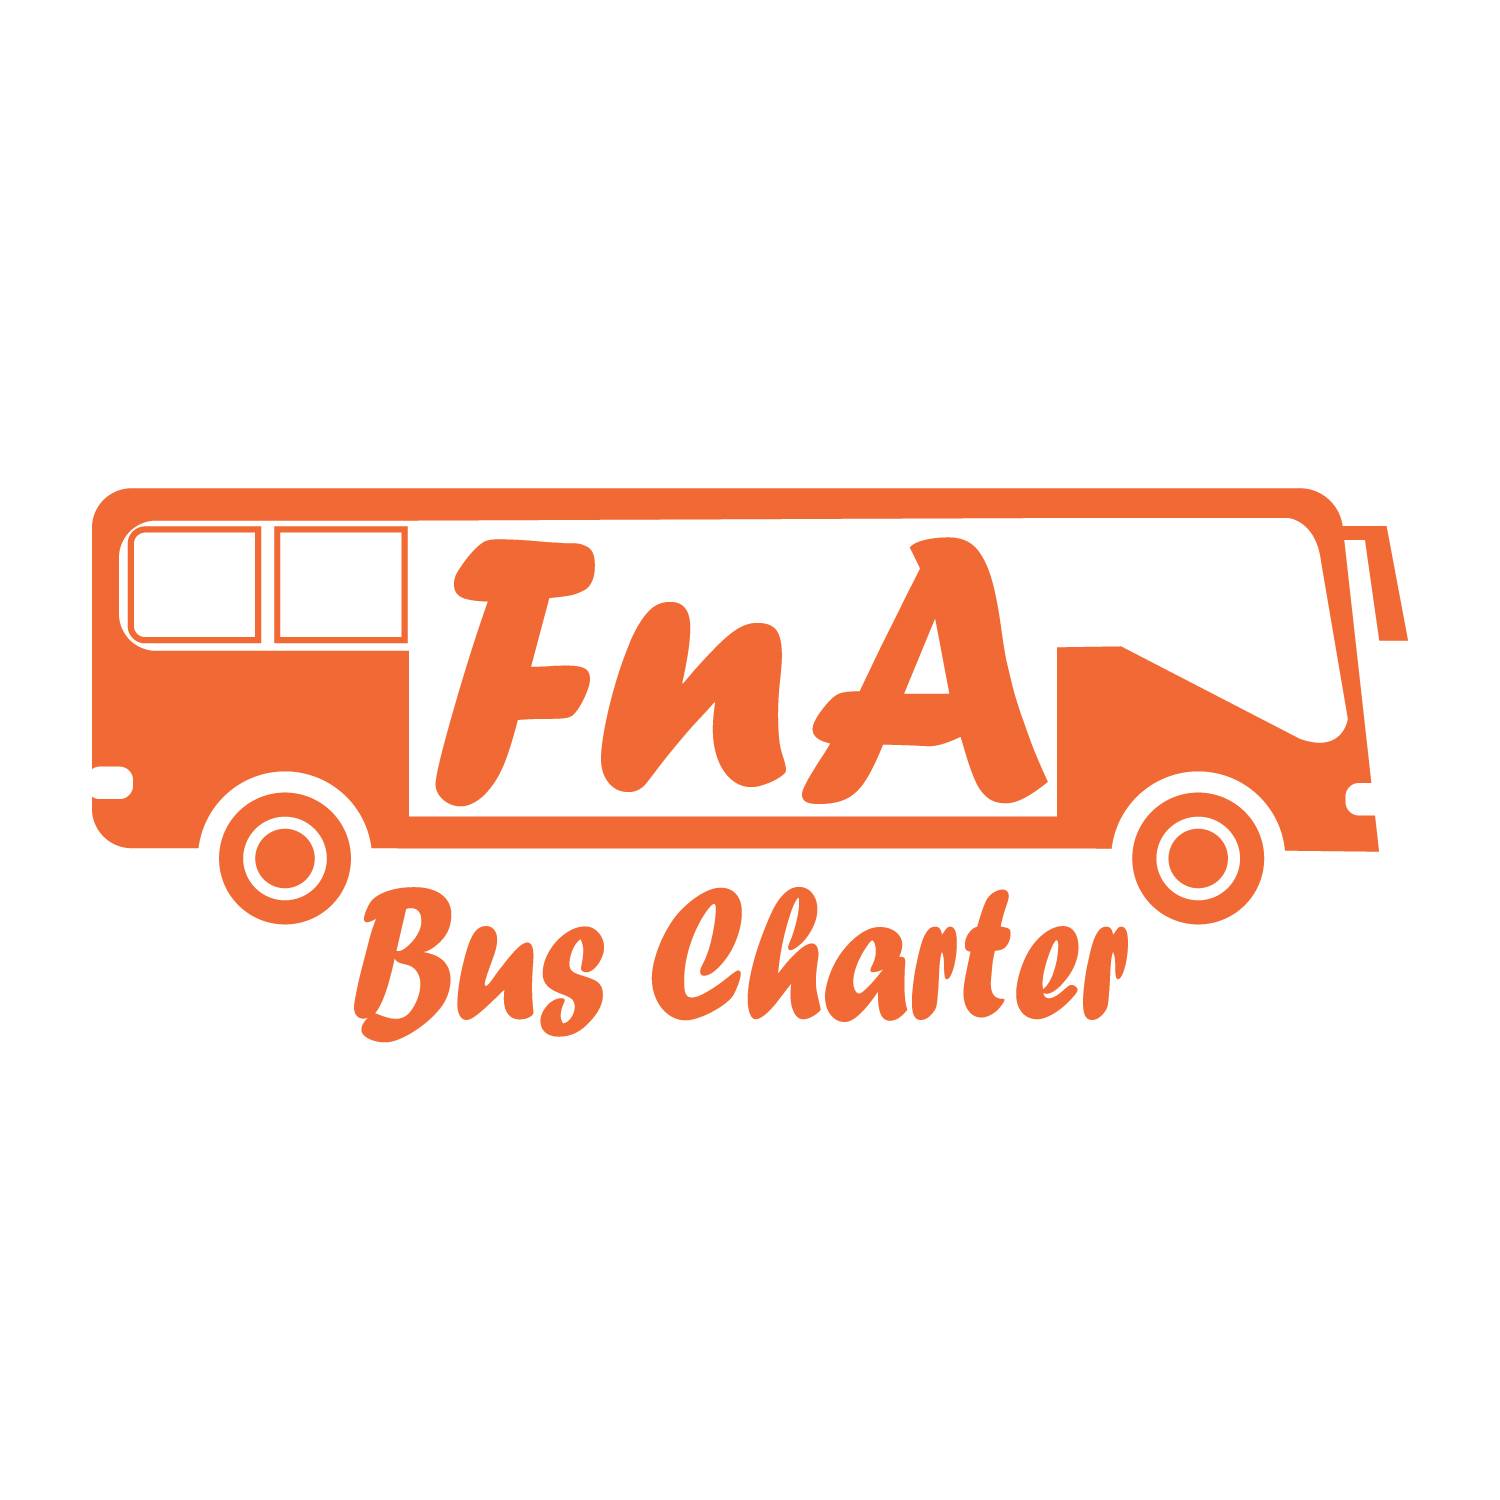 FnaBus Charter